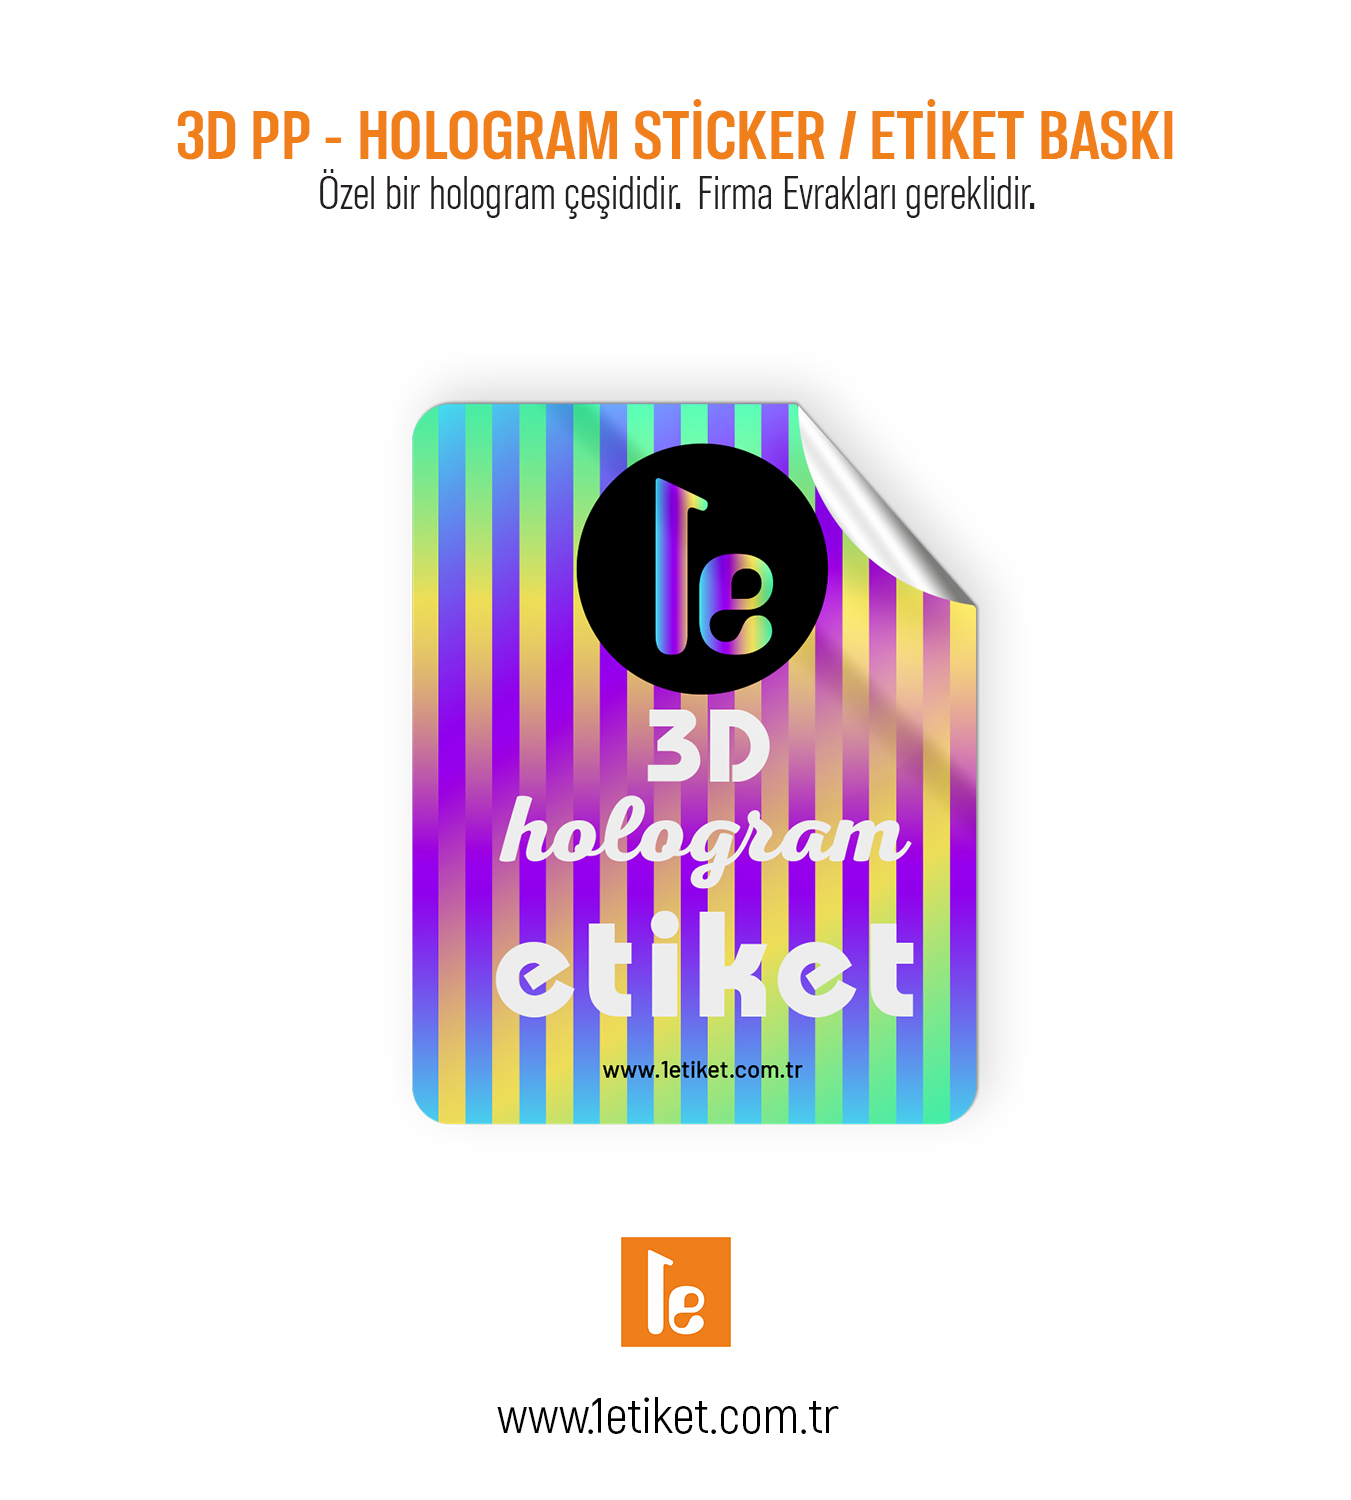 3D Hologram Sticker / Etiket Baskı